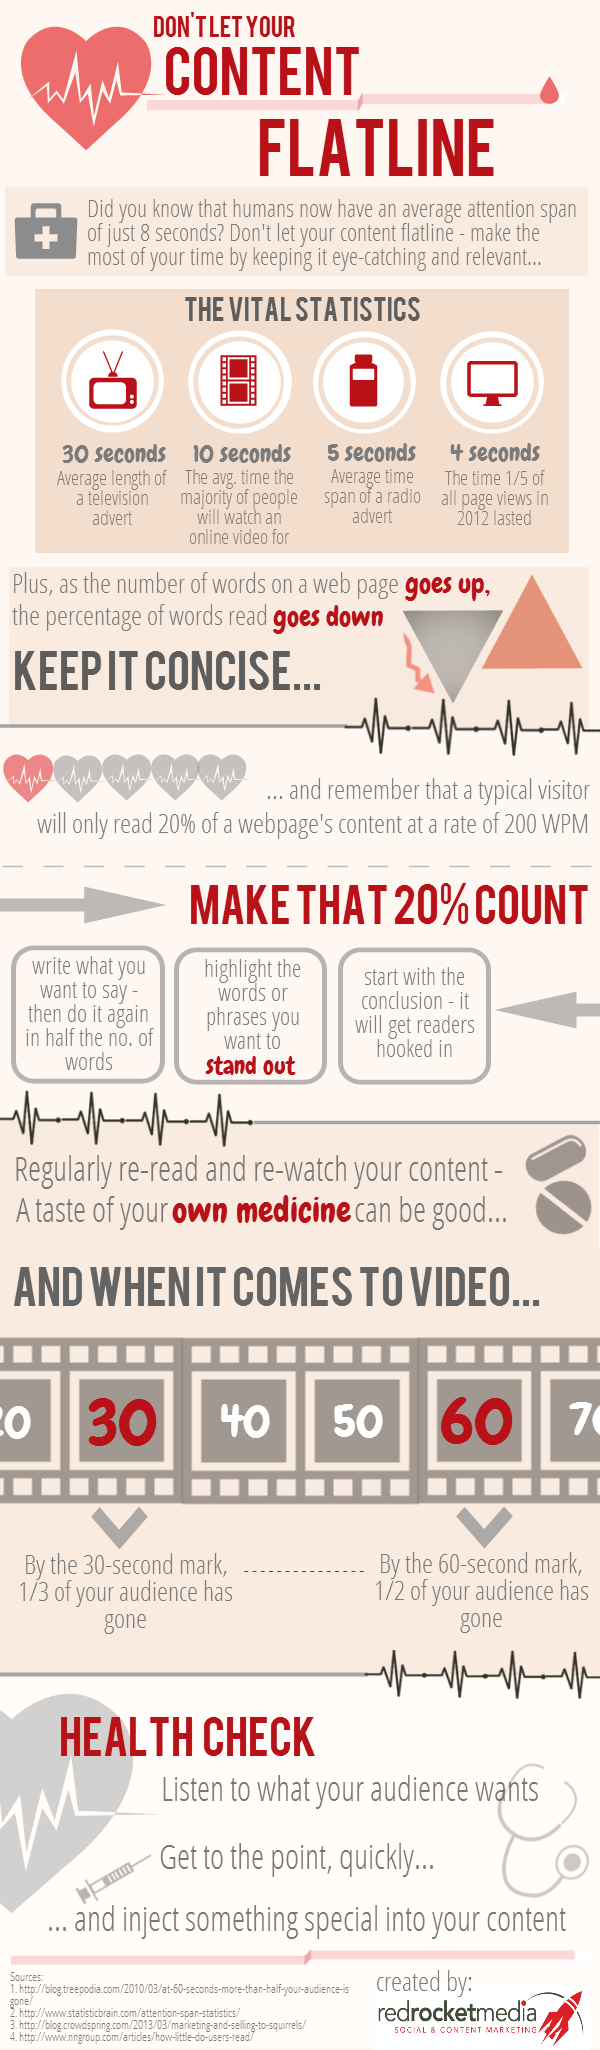 emergency-dont-let-your-content-flatline-infographic_5164c70087deb